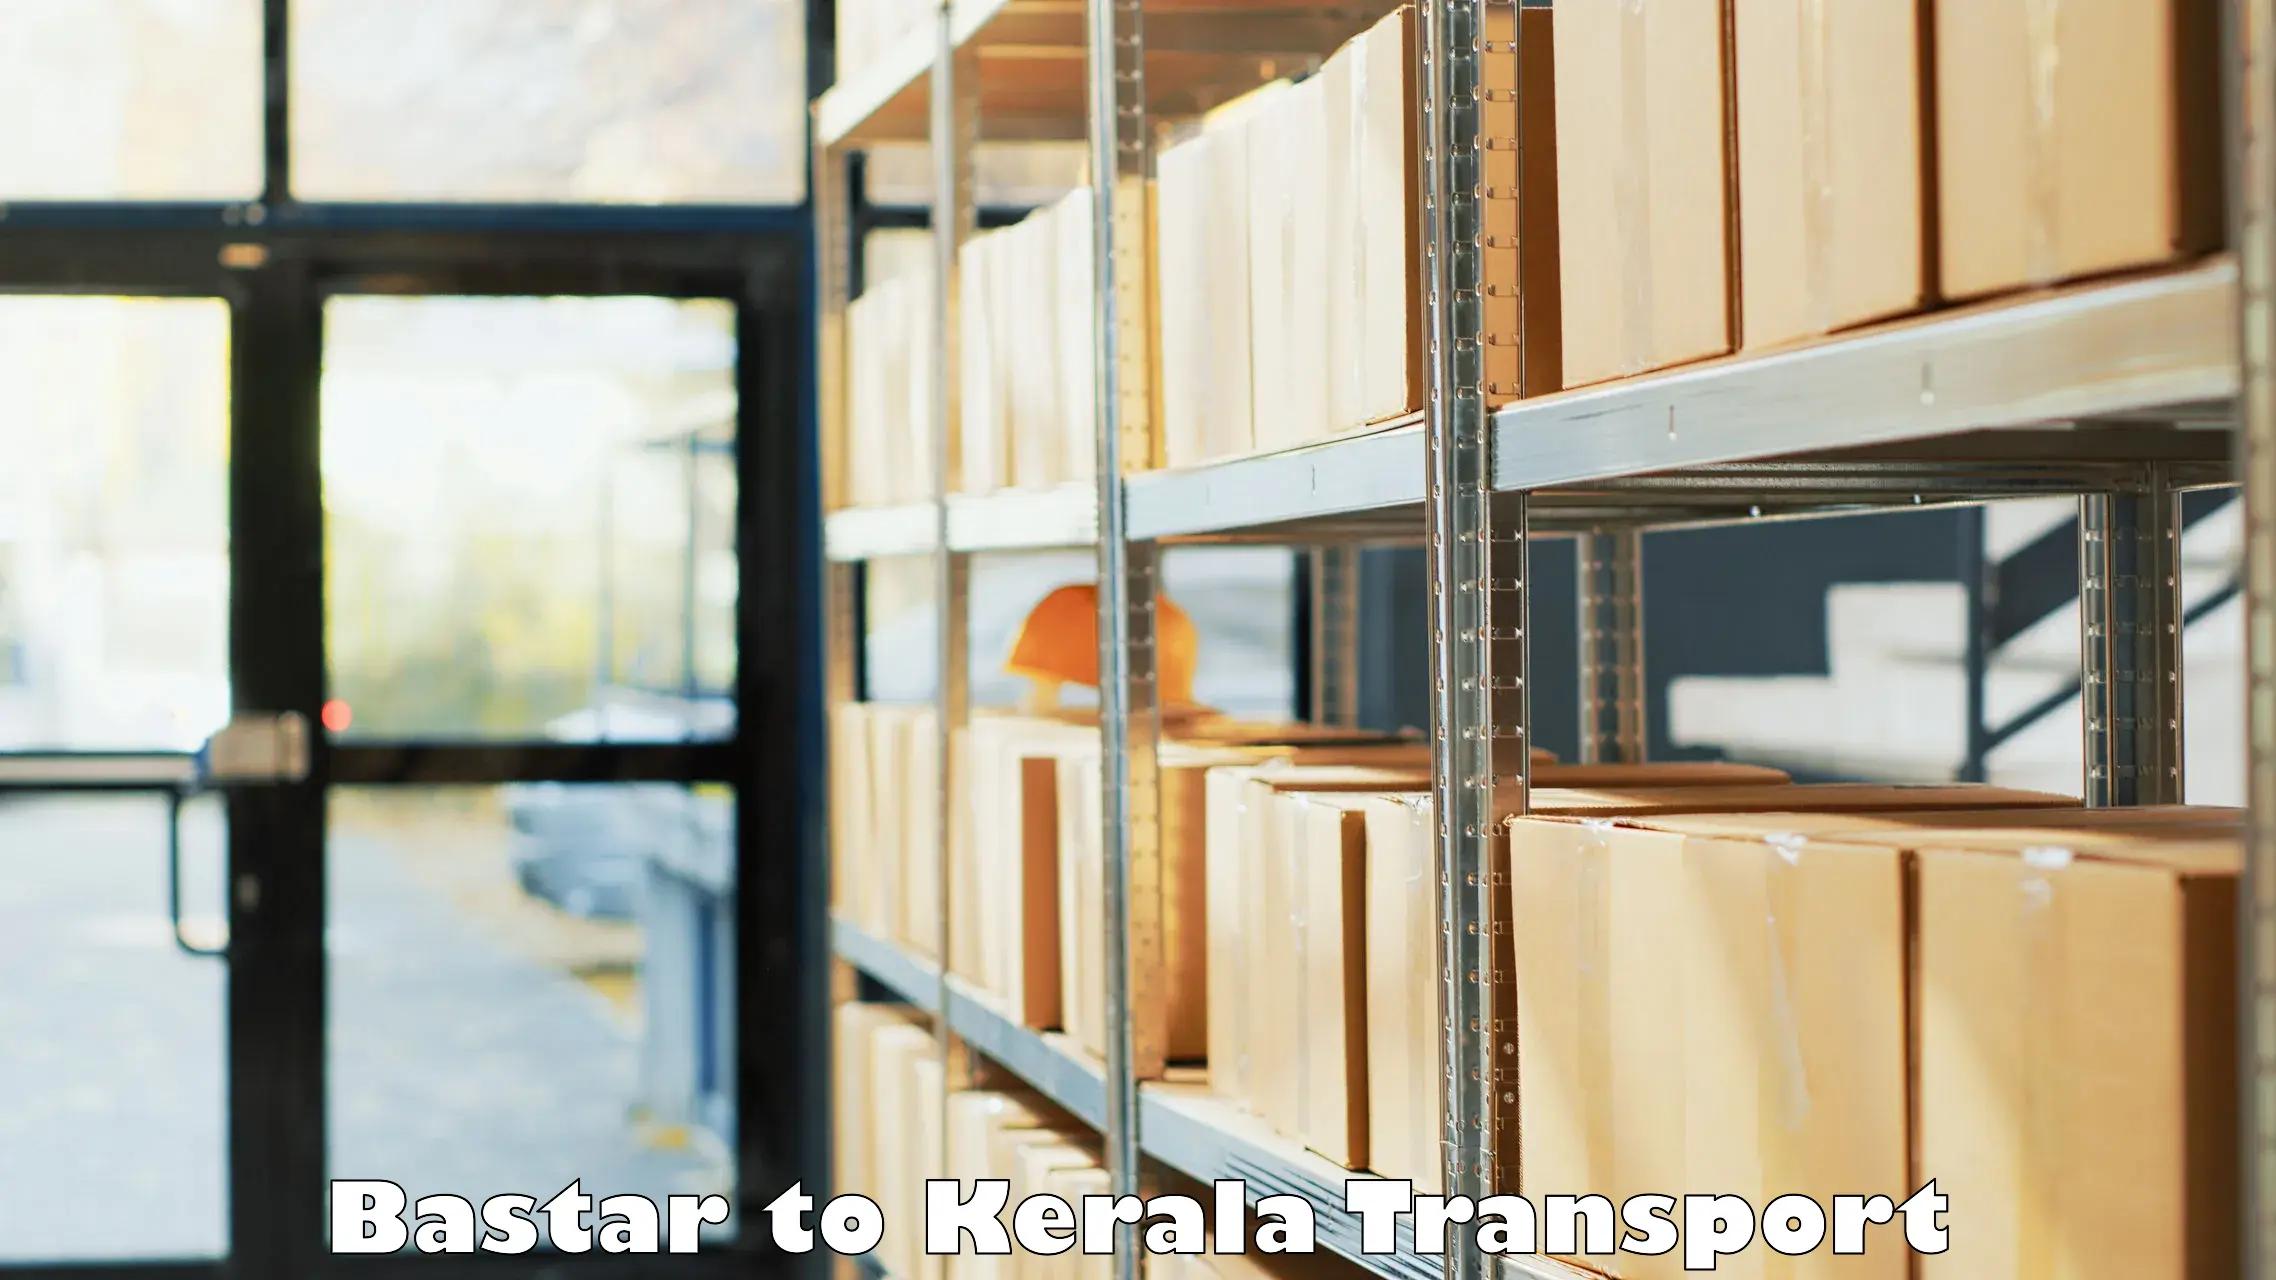 Nearby transport service Bastar to Kerala